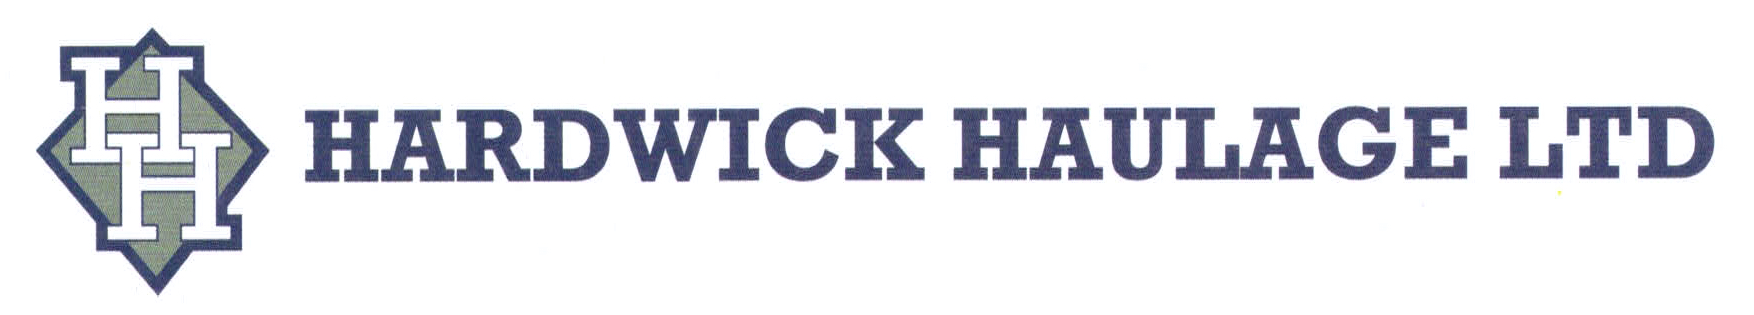 Hardwick Haulage Ltd